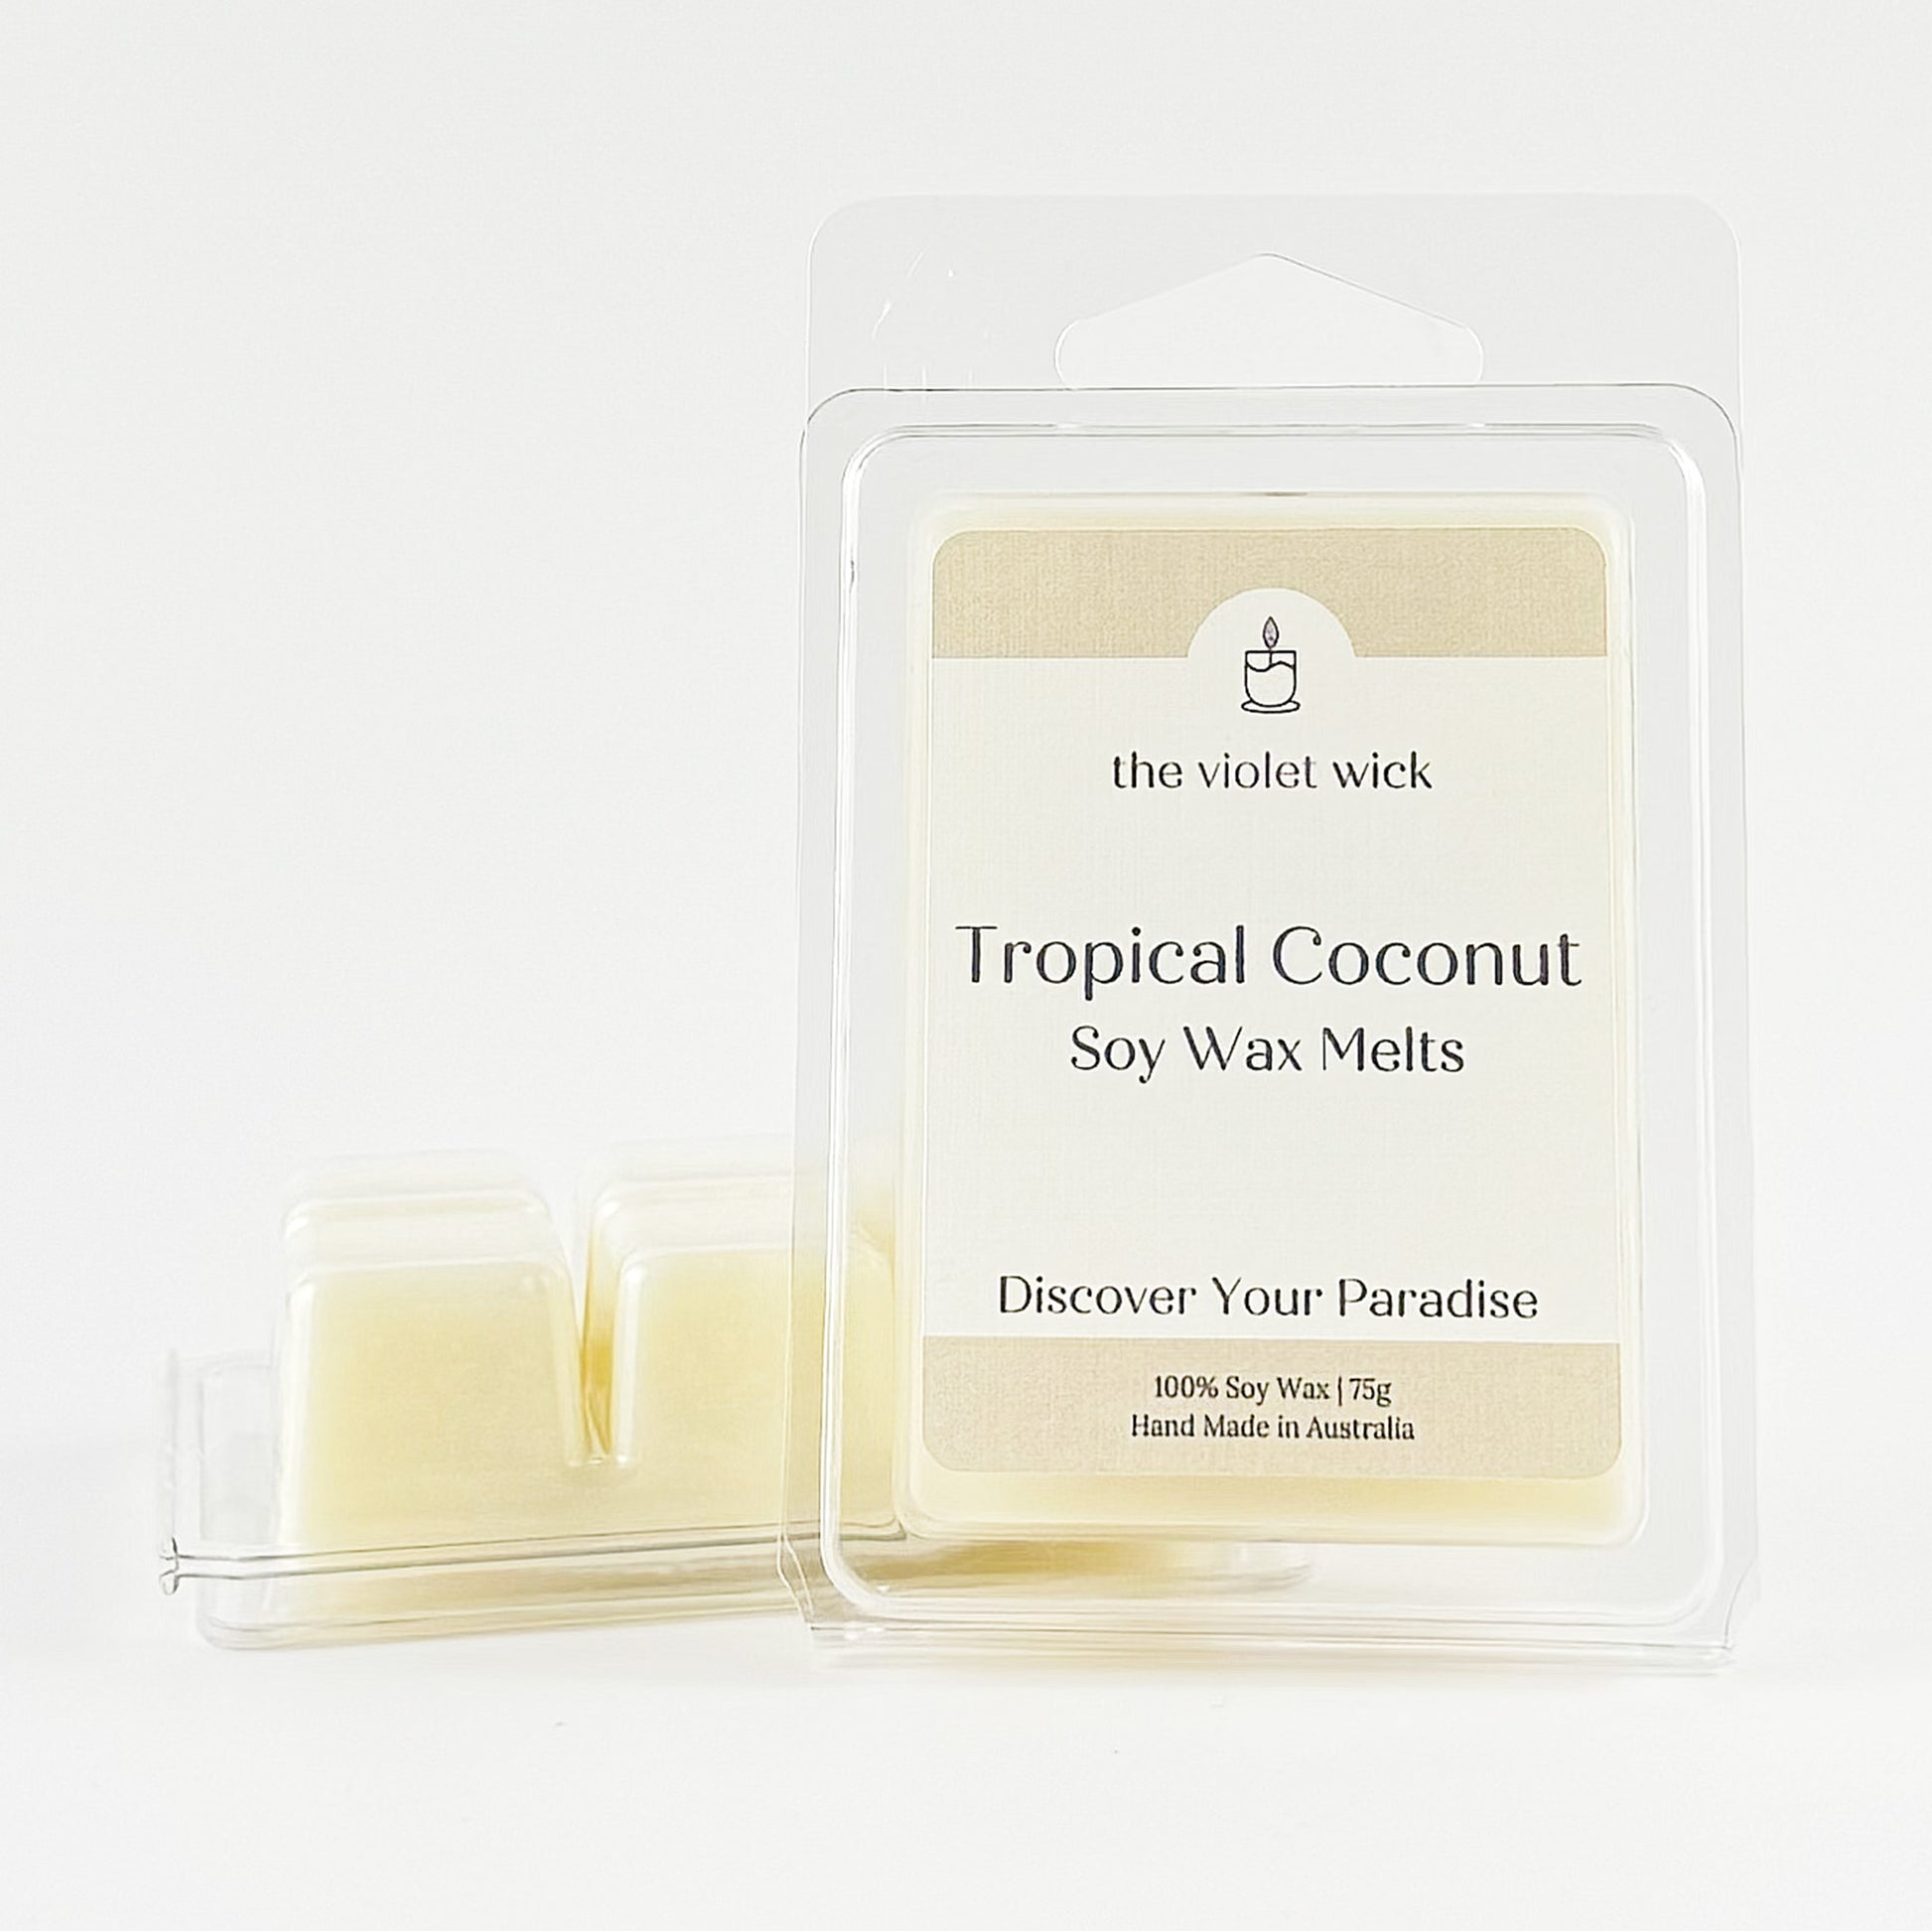 Tropical Coconut Soy Wax Melt